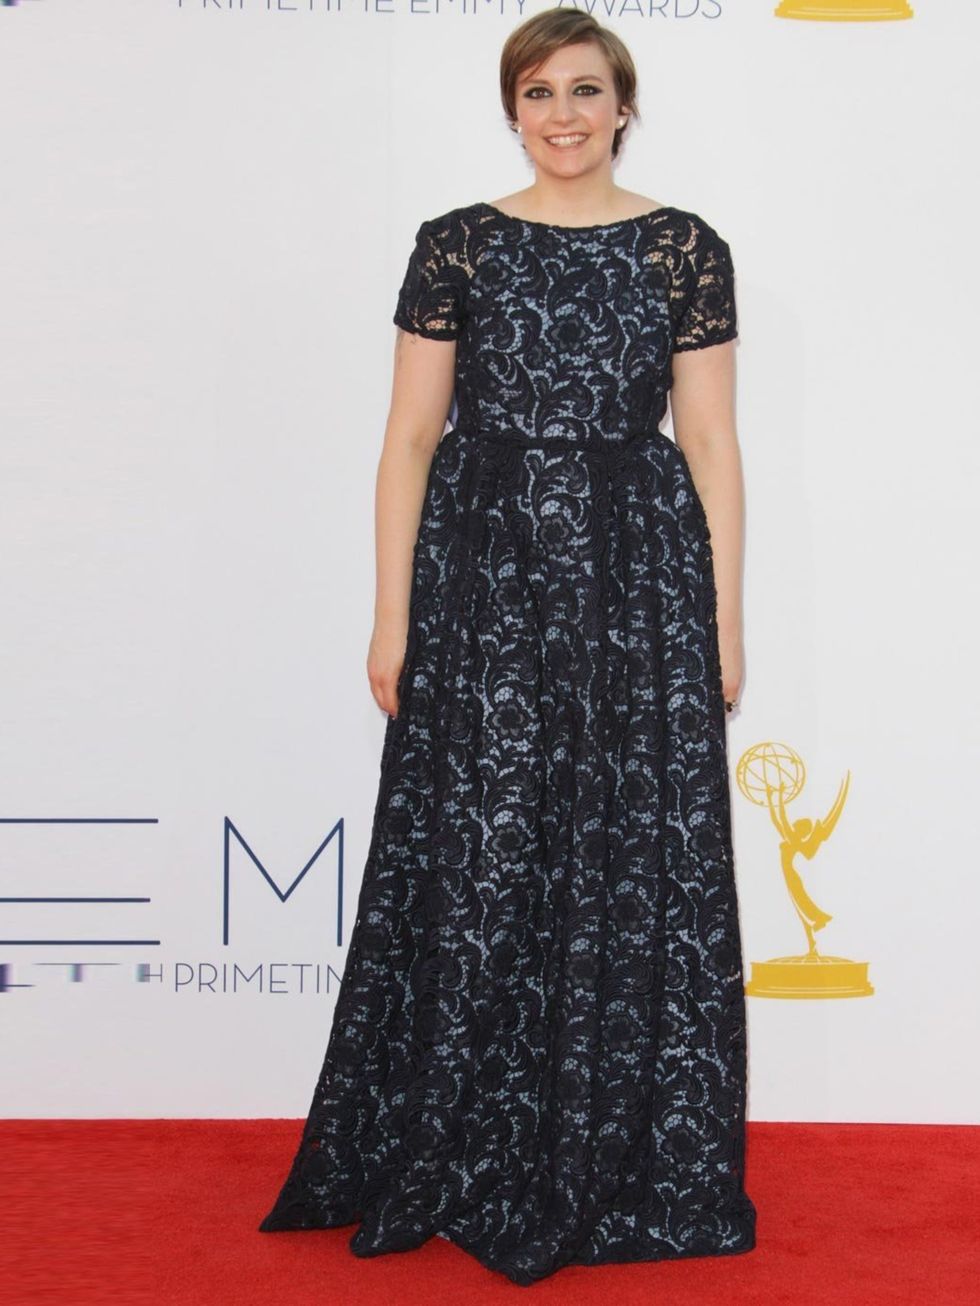 &lt;p&gt;Lena Dunham wears a black lace &lt;a href=&quot;http://www.elleuk.com/catwalk/designer-a-z/prada/spring-summer-2013&quot;&gt;Prada&lt;/a&gt; dress to the 2012 Emmy Awards in LA.&lt;/p&gt;